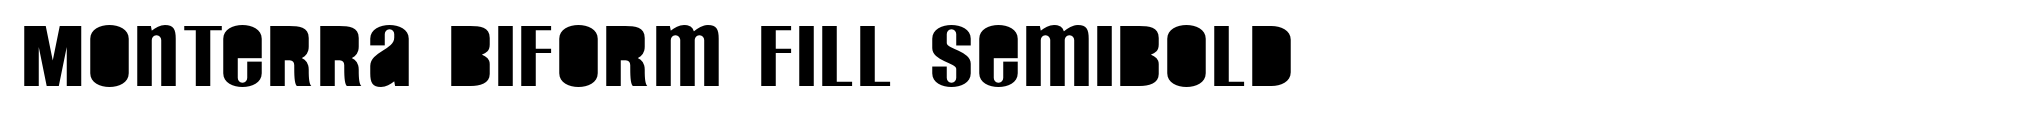 Monterra Biform Fill SemiBold image